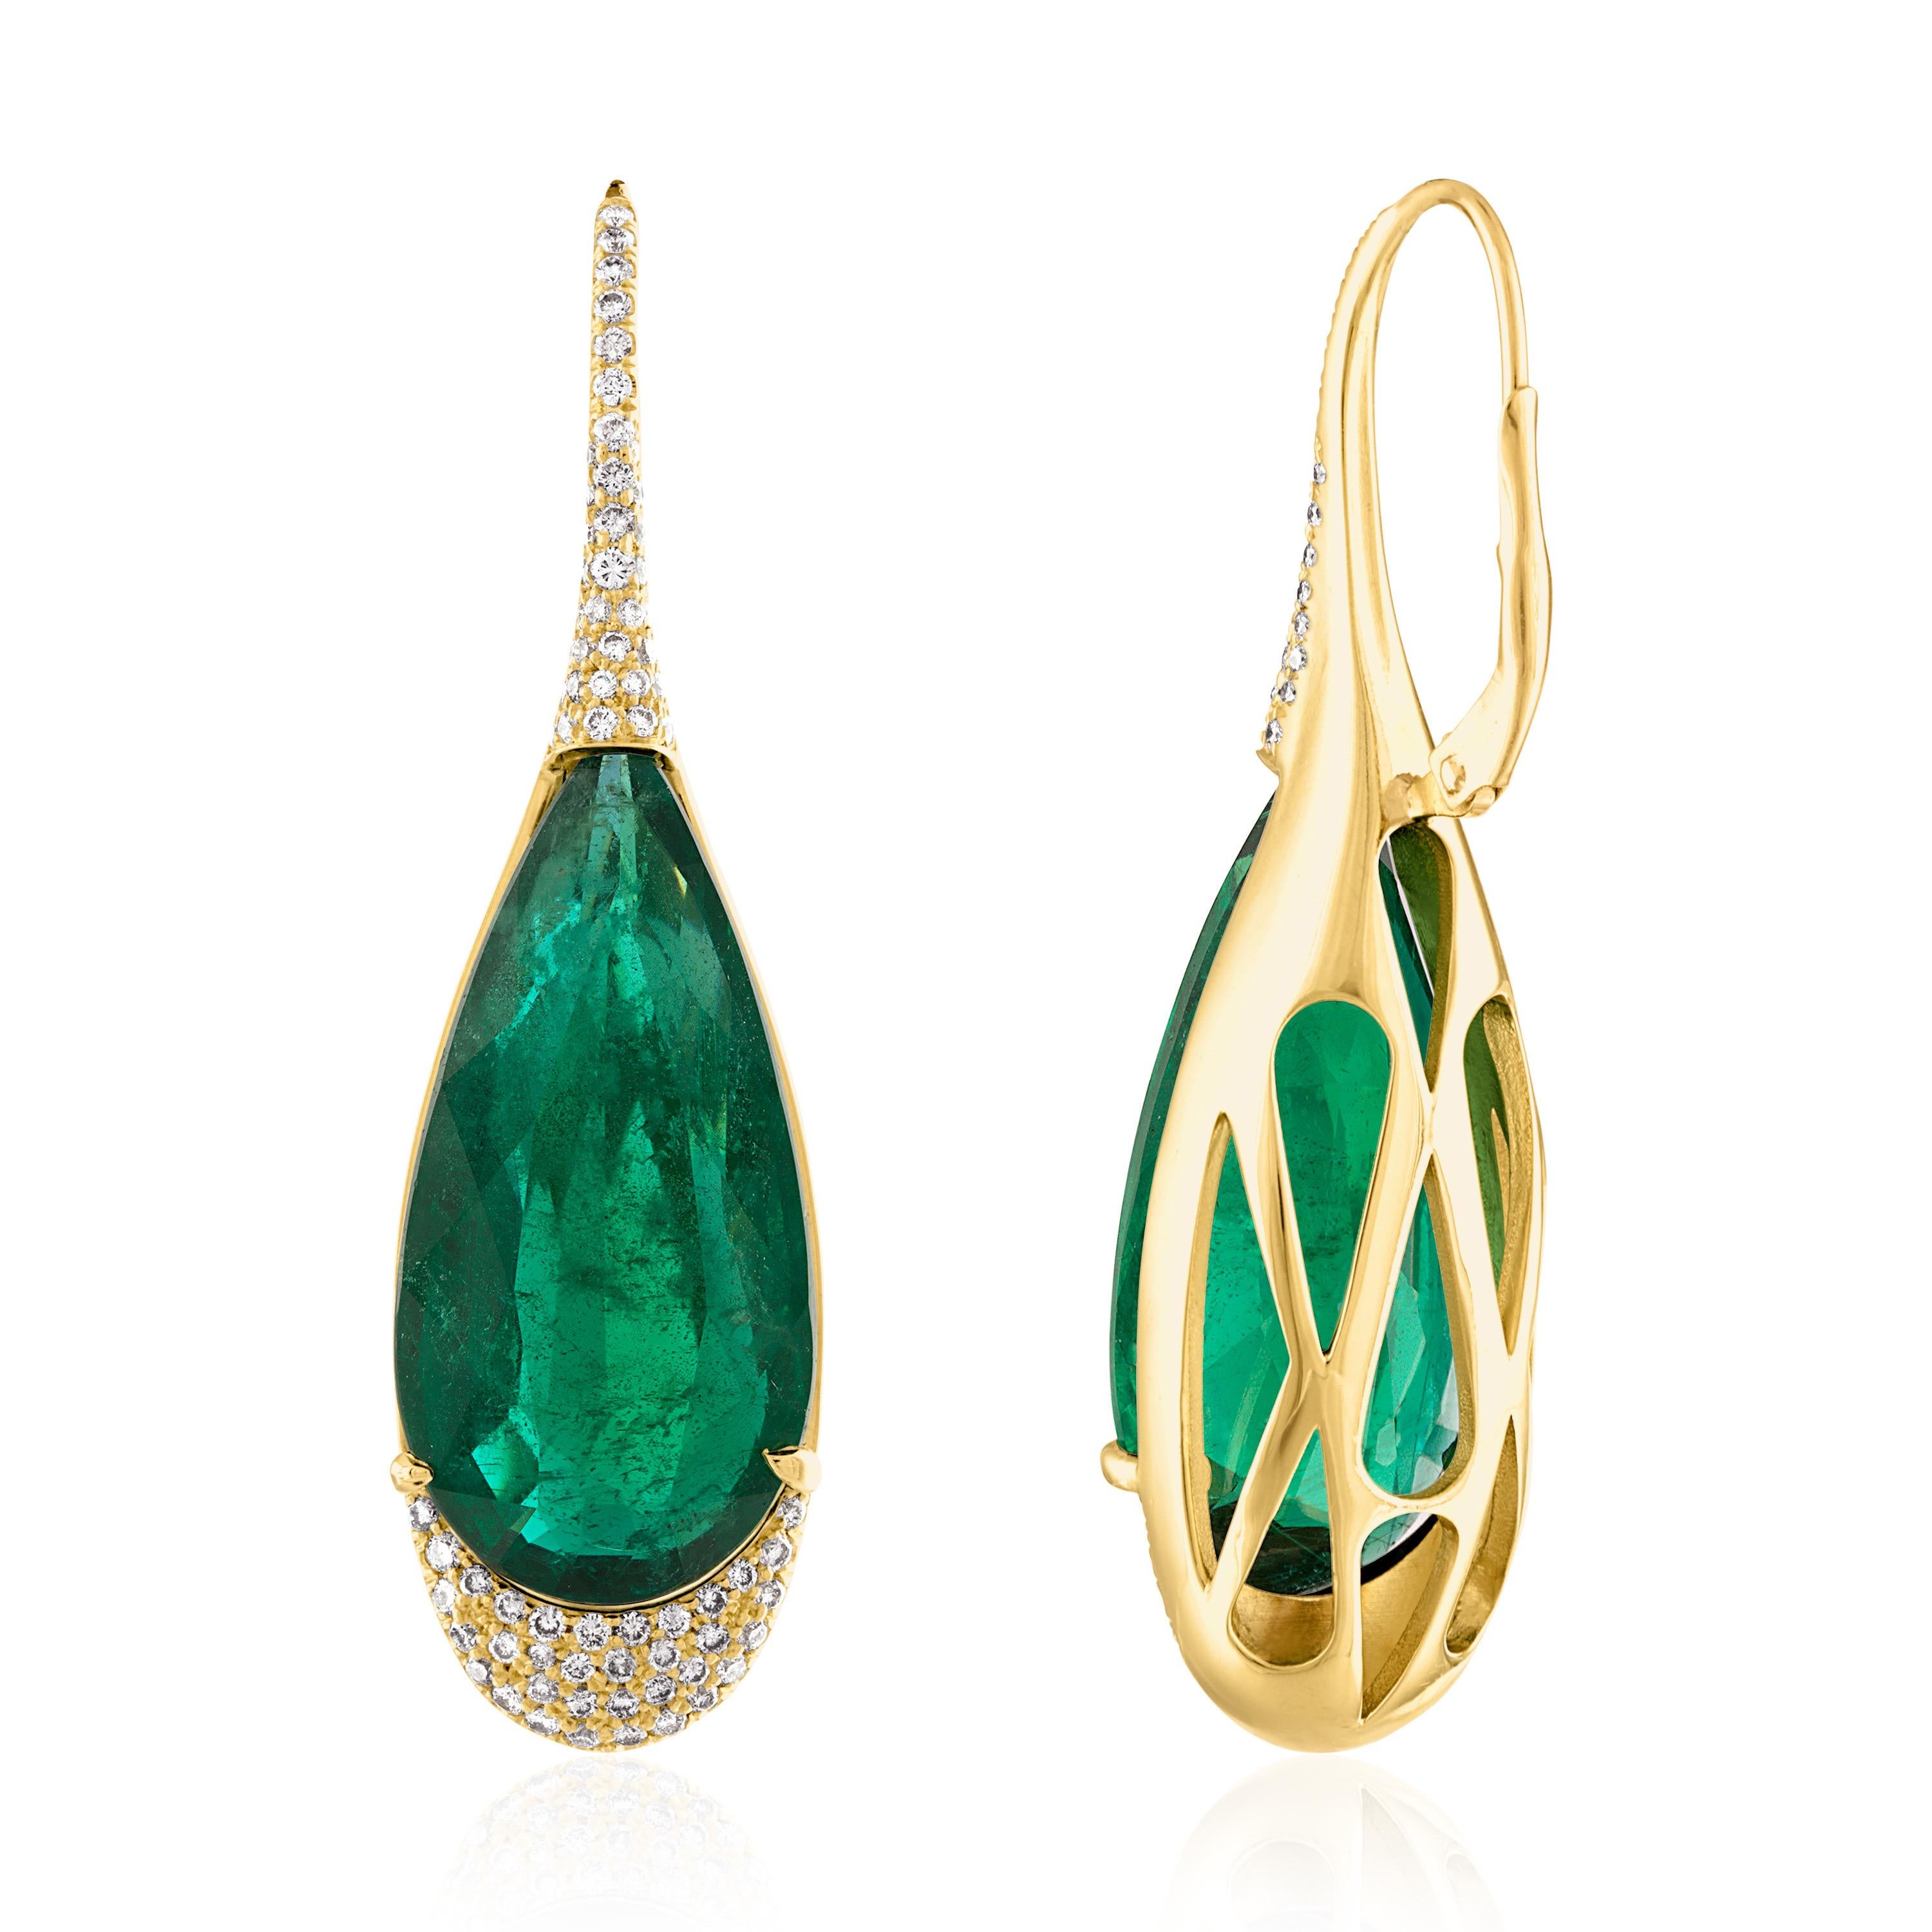 Mixed Cut Mindi Mond Certified 31.29 Carat Natural Zambian Emerald Diamond Drop Earrings For Sale